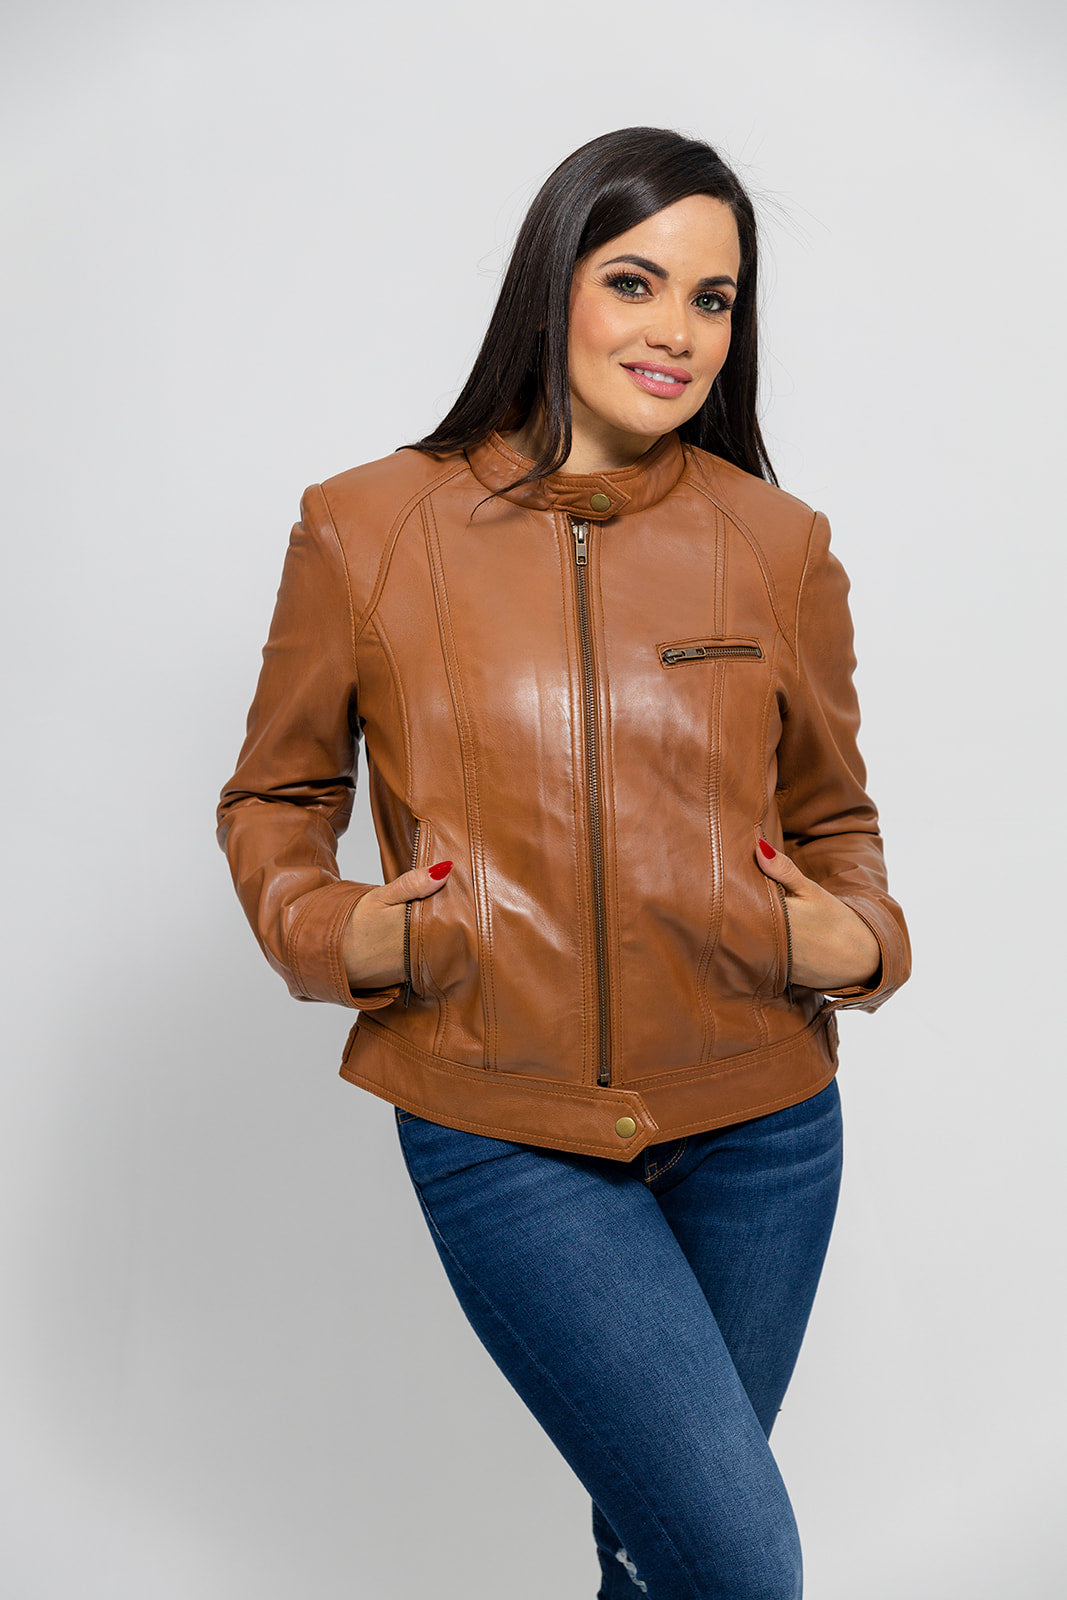 New Girls Classic Medium Brando Star Patches Black Leather Jacket, Girls  fashion | eBay